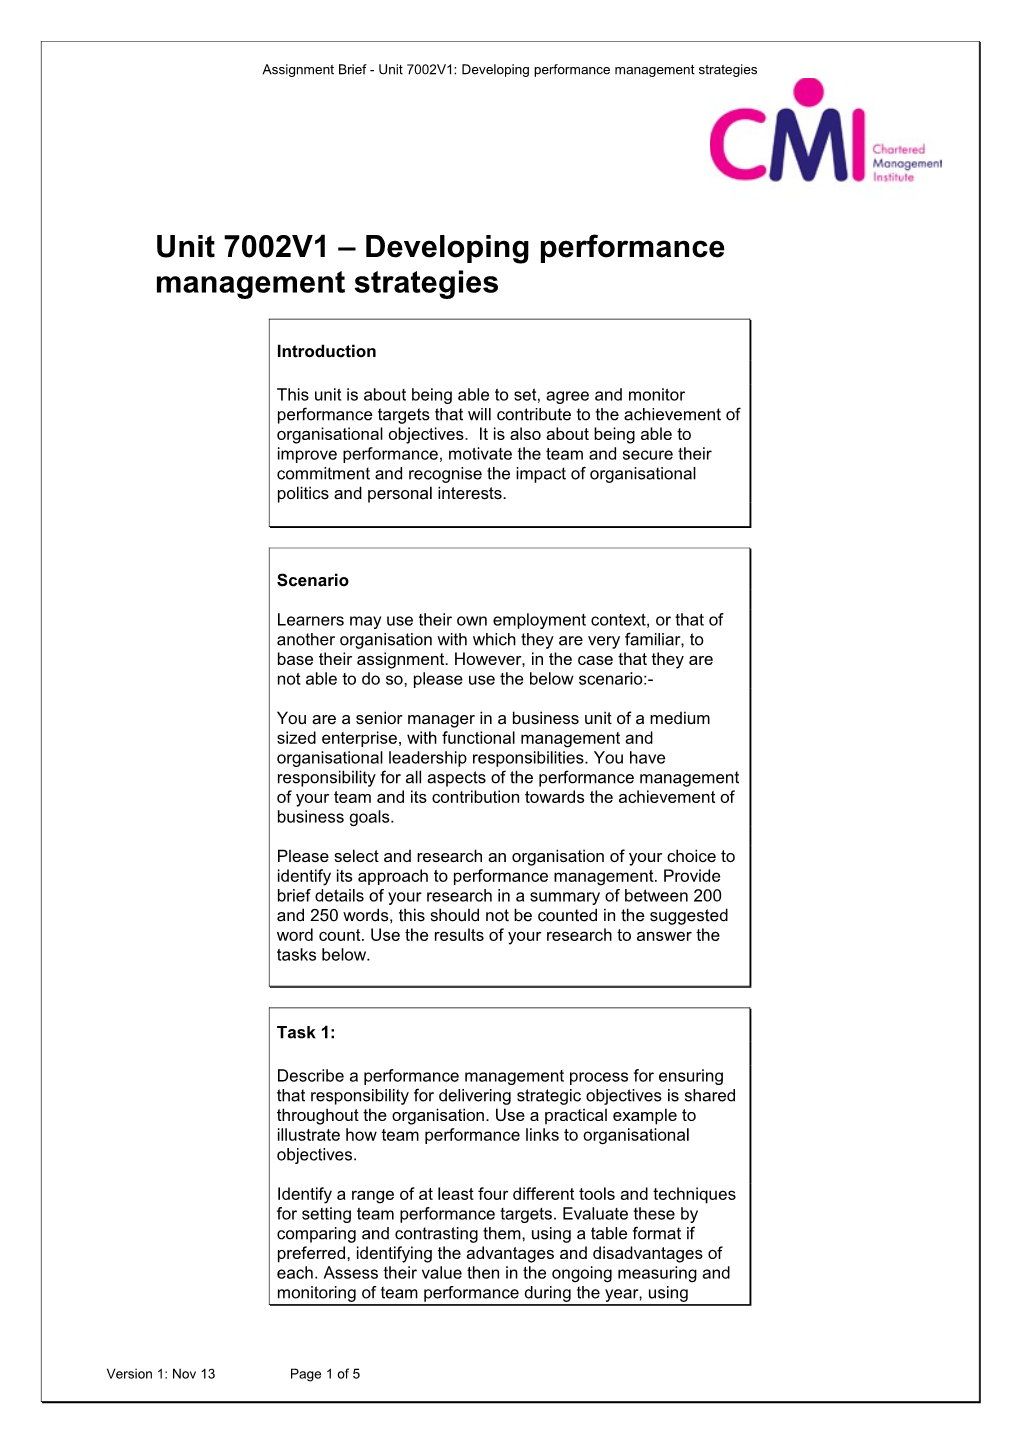 Unit 7002V1 Developing Performance Management Strategies